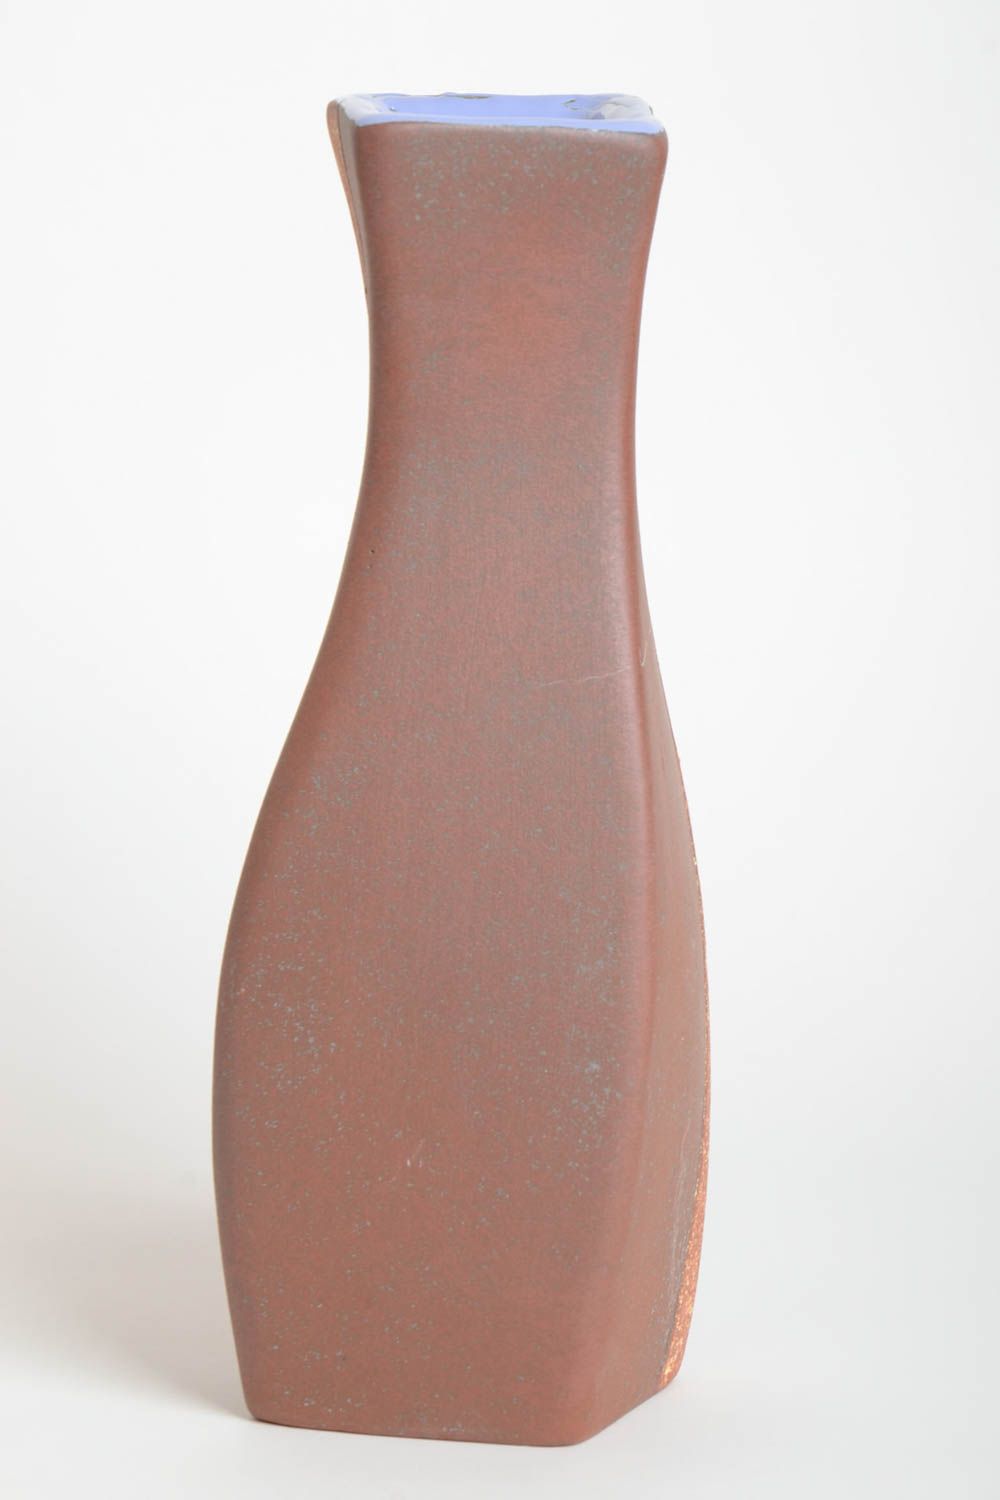 12-inch vase décor in beige, yellow, red, orange colors 2,8 lb photo 4